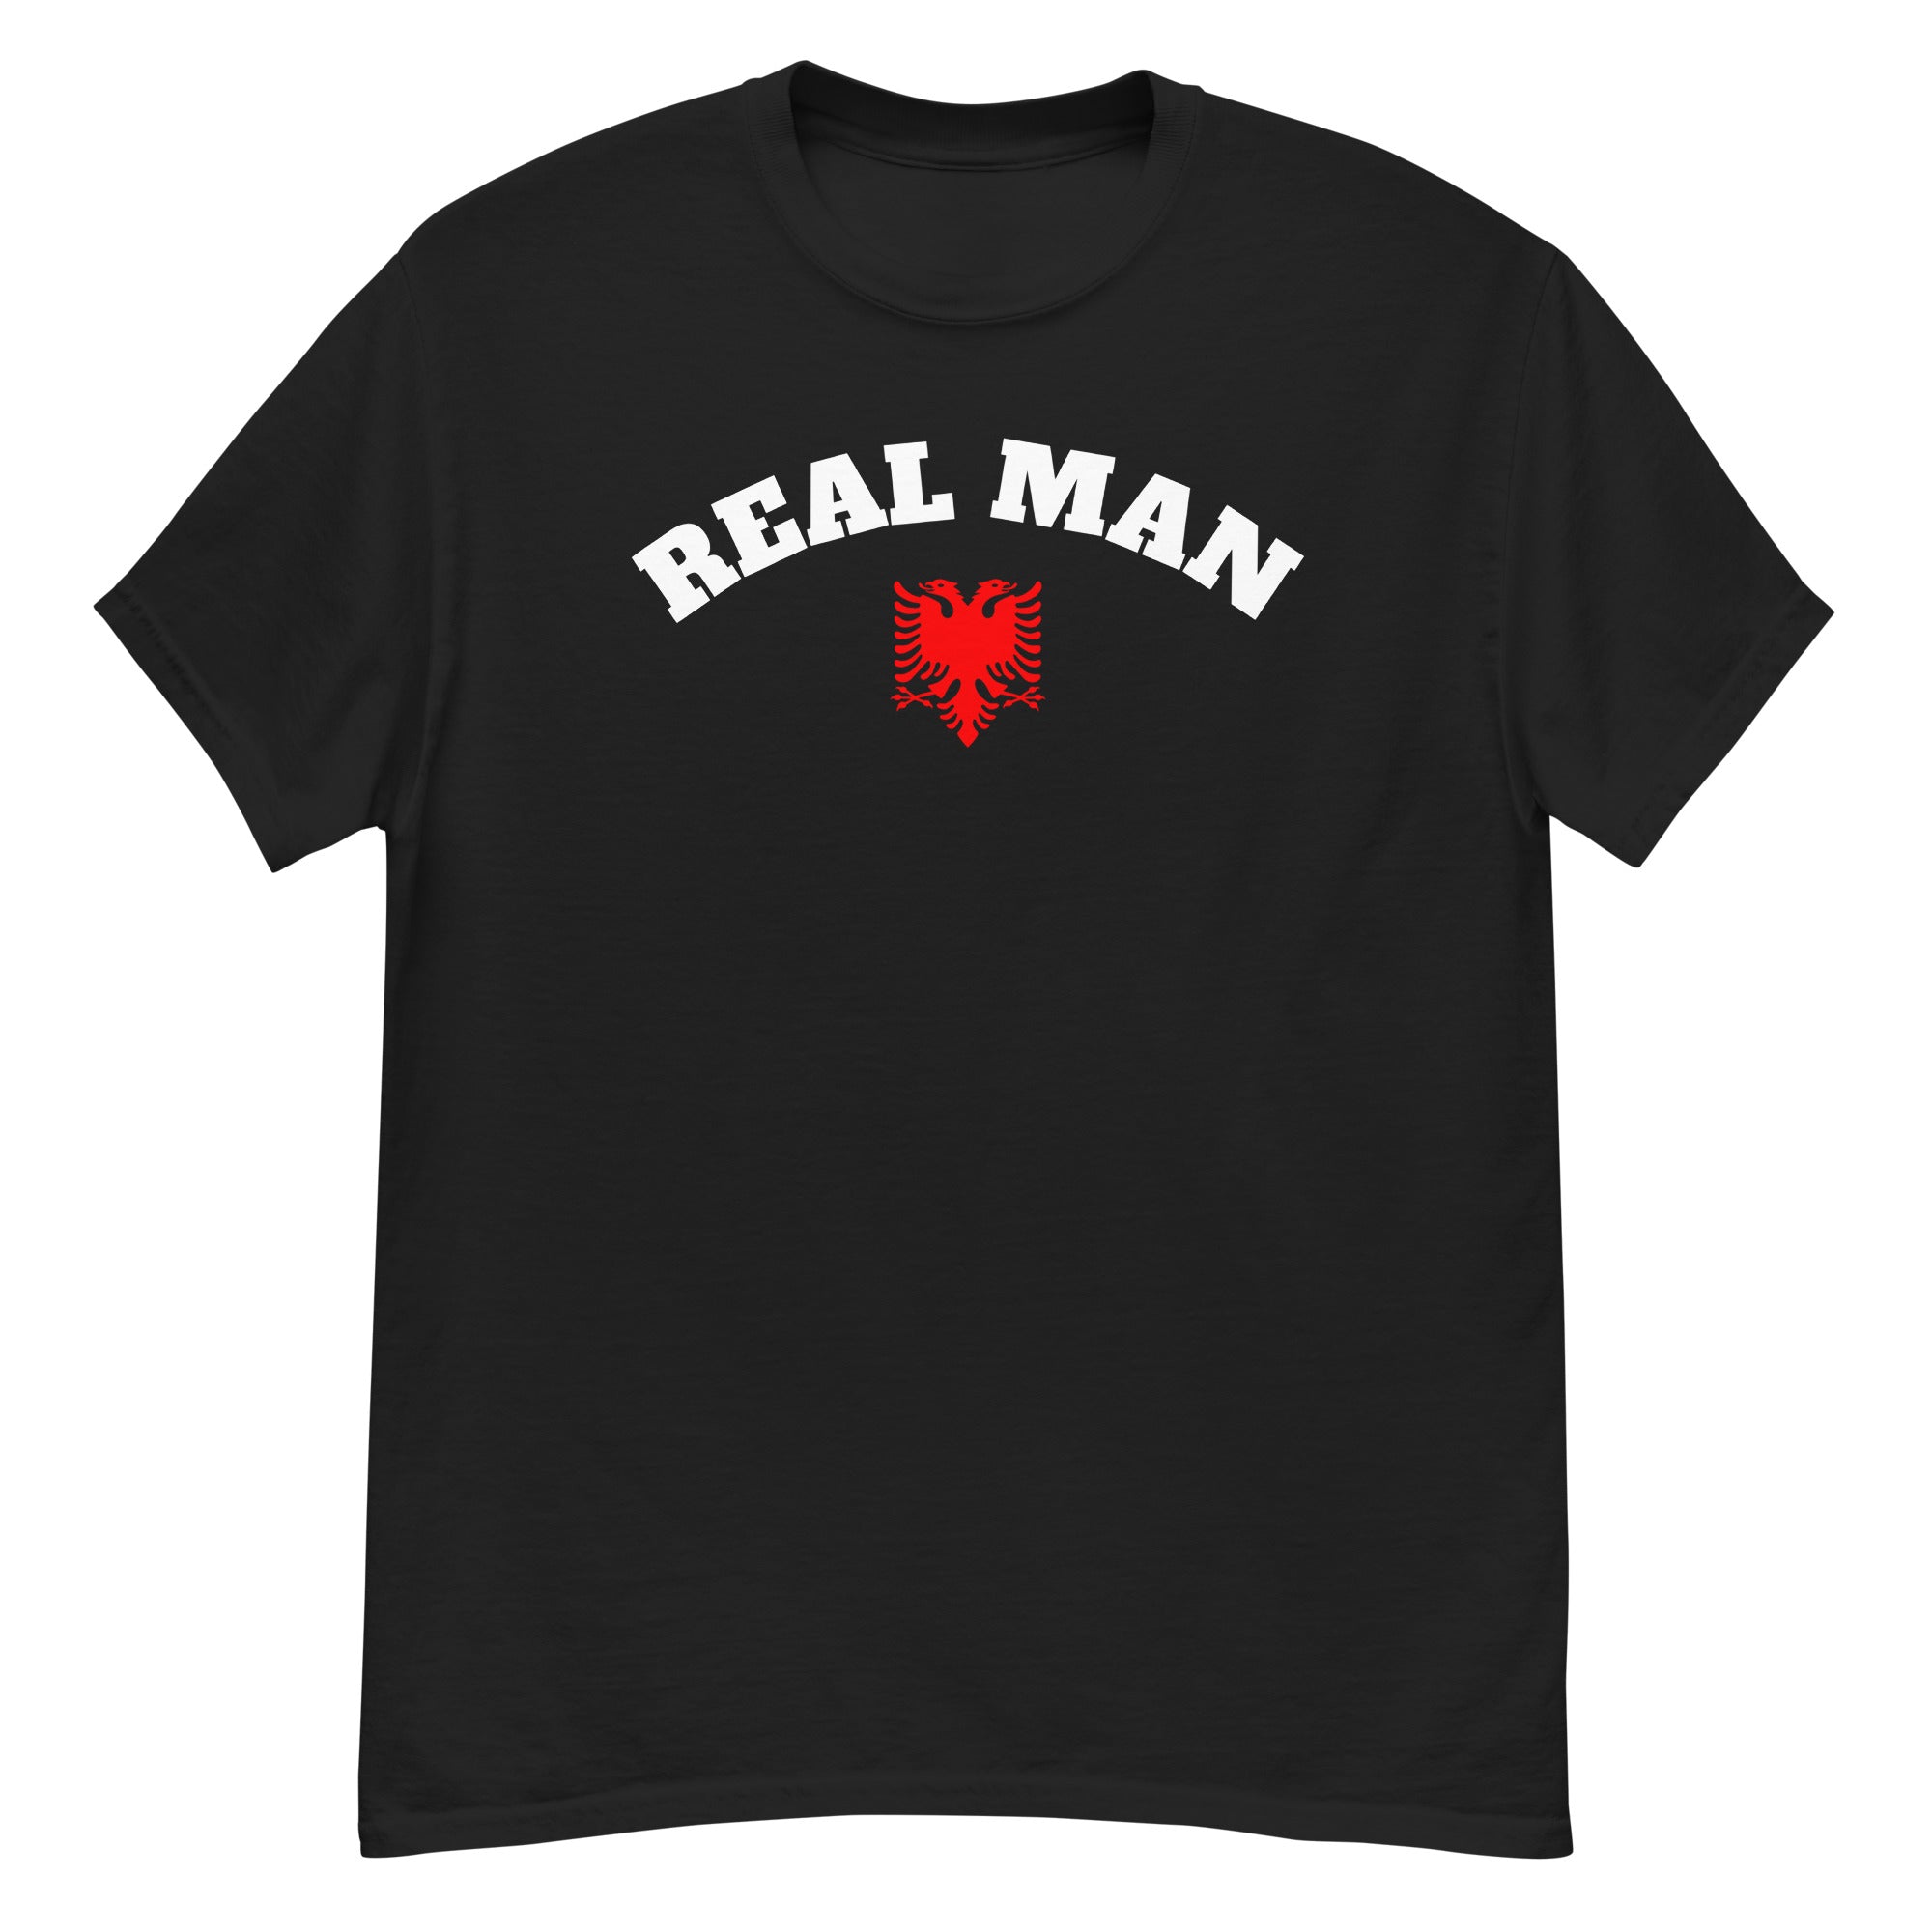 Albanian real man Men's classic tee